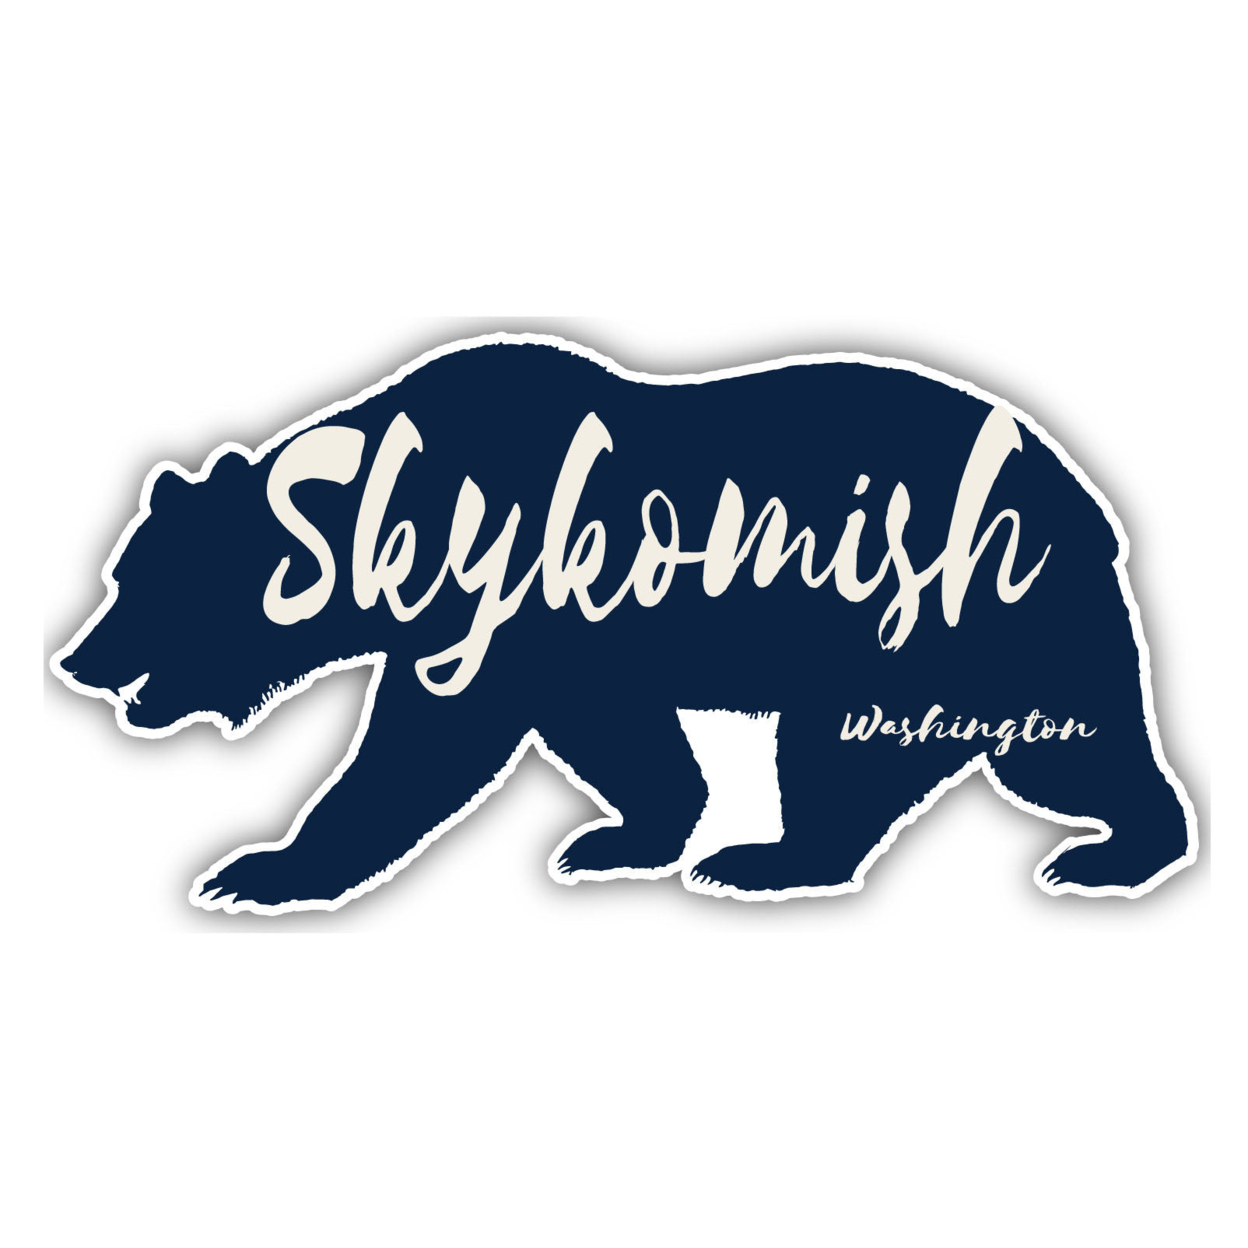 Skykomish Washington Souvenir Decorative Stickers (Choose Theme And Size) - Single Unit, 4-Inch, Great Outdoors